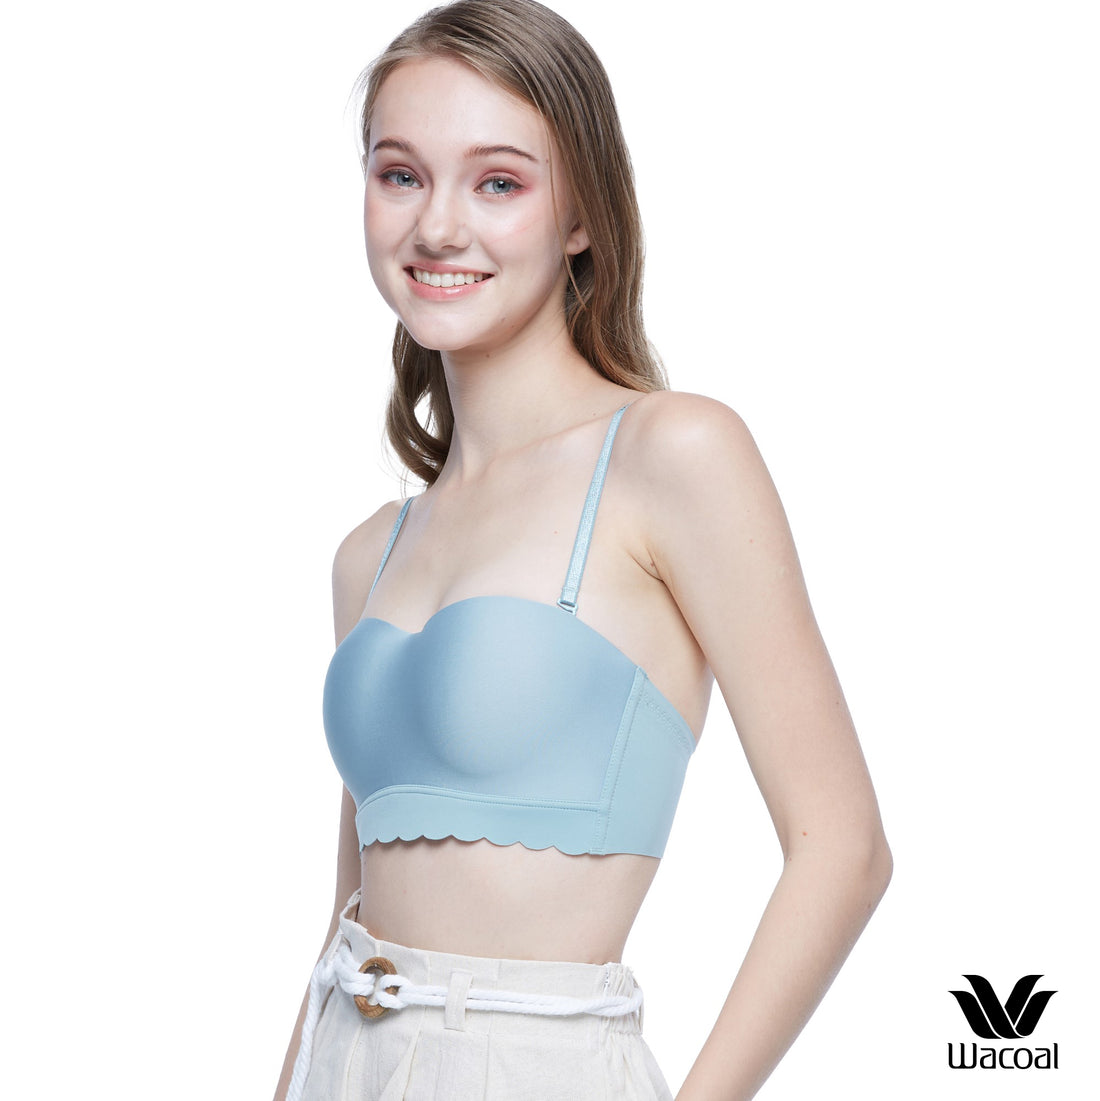 Wacoal Go Girls Smart Size Wavy Top Wacoal strapless bra, comfortable fit, model WB3Y31, light blue (LT)